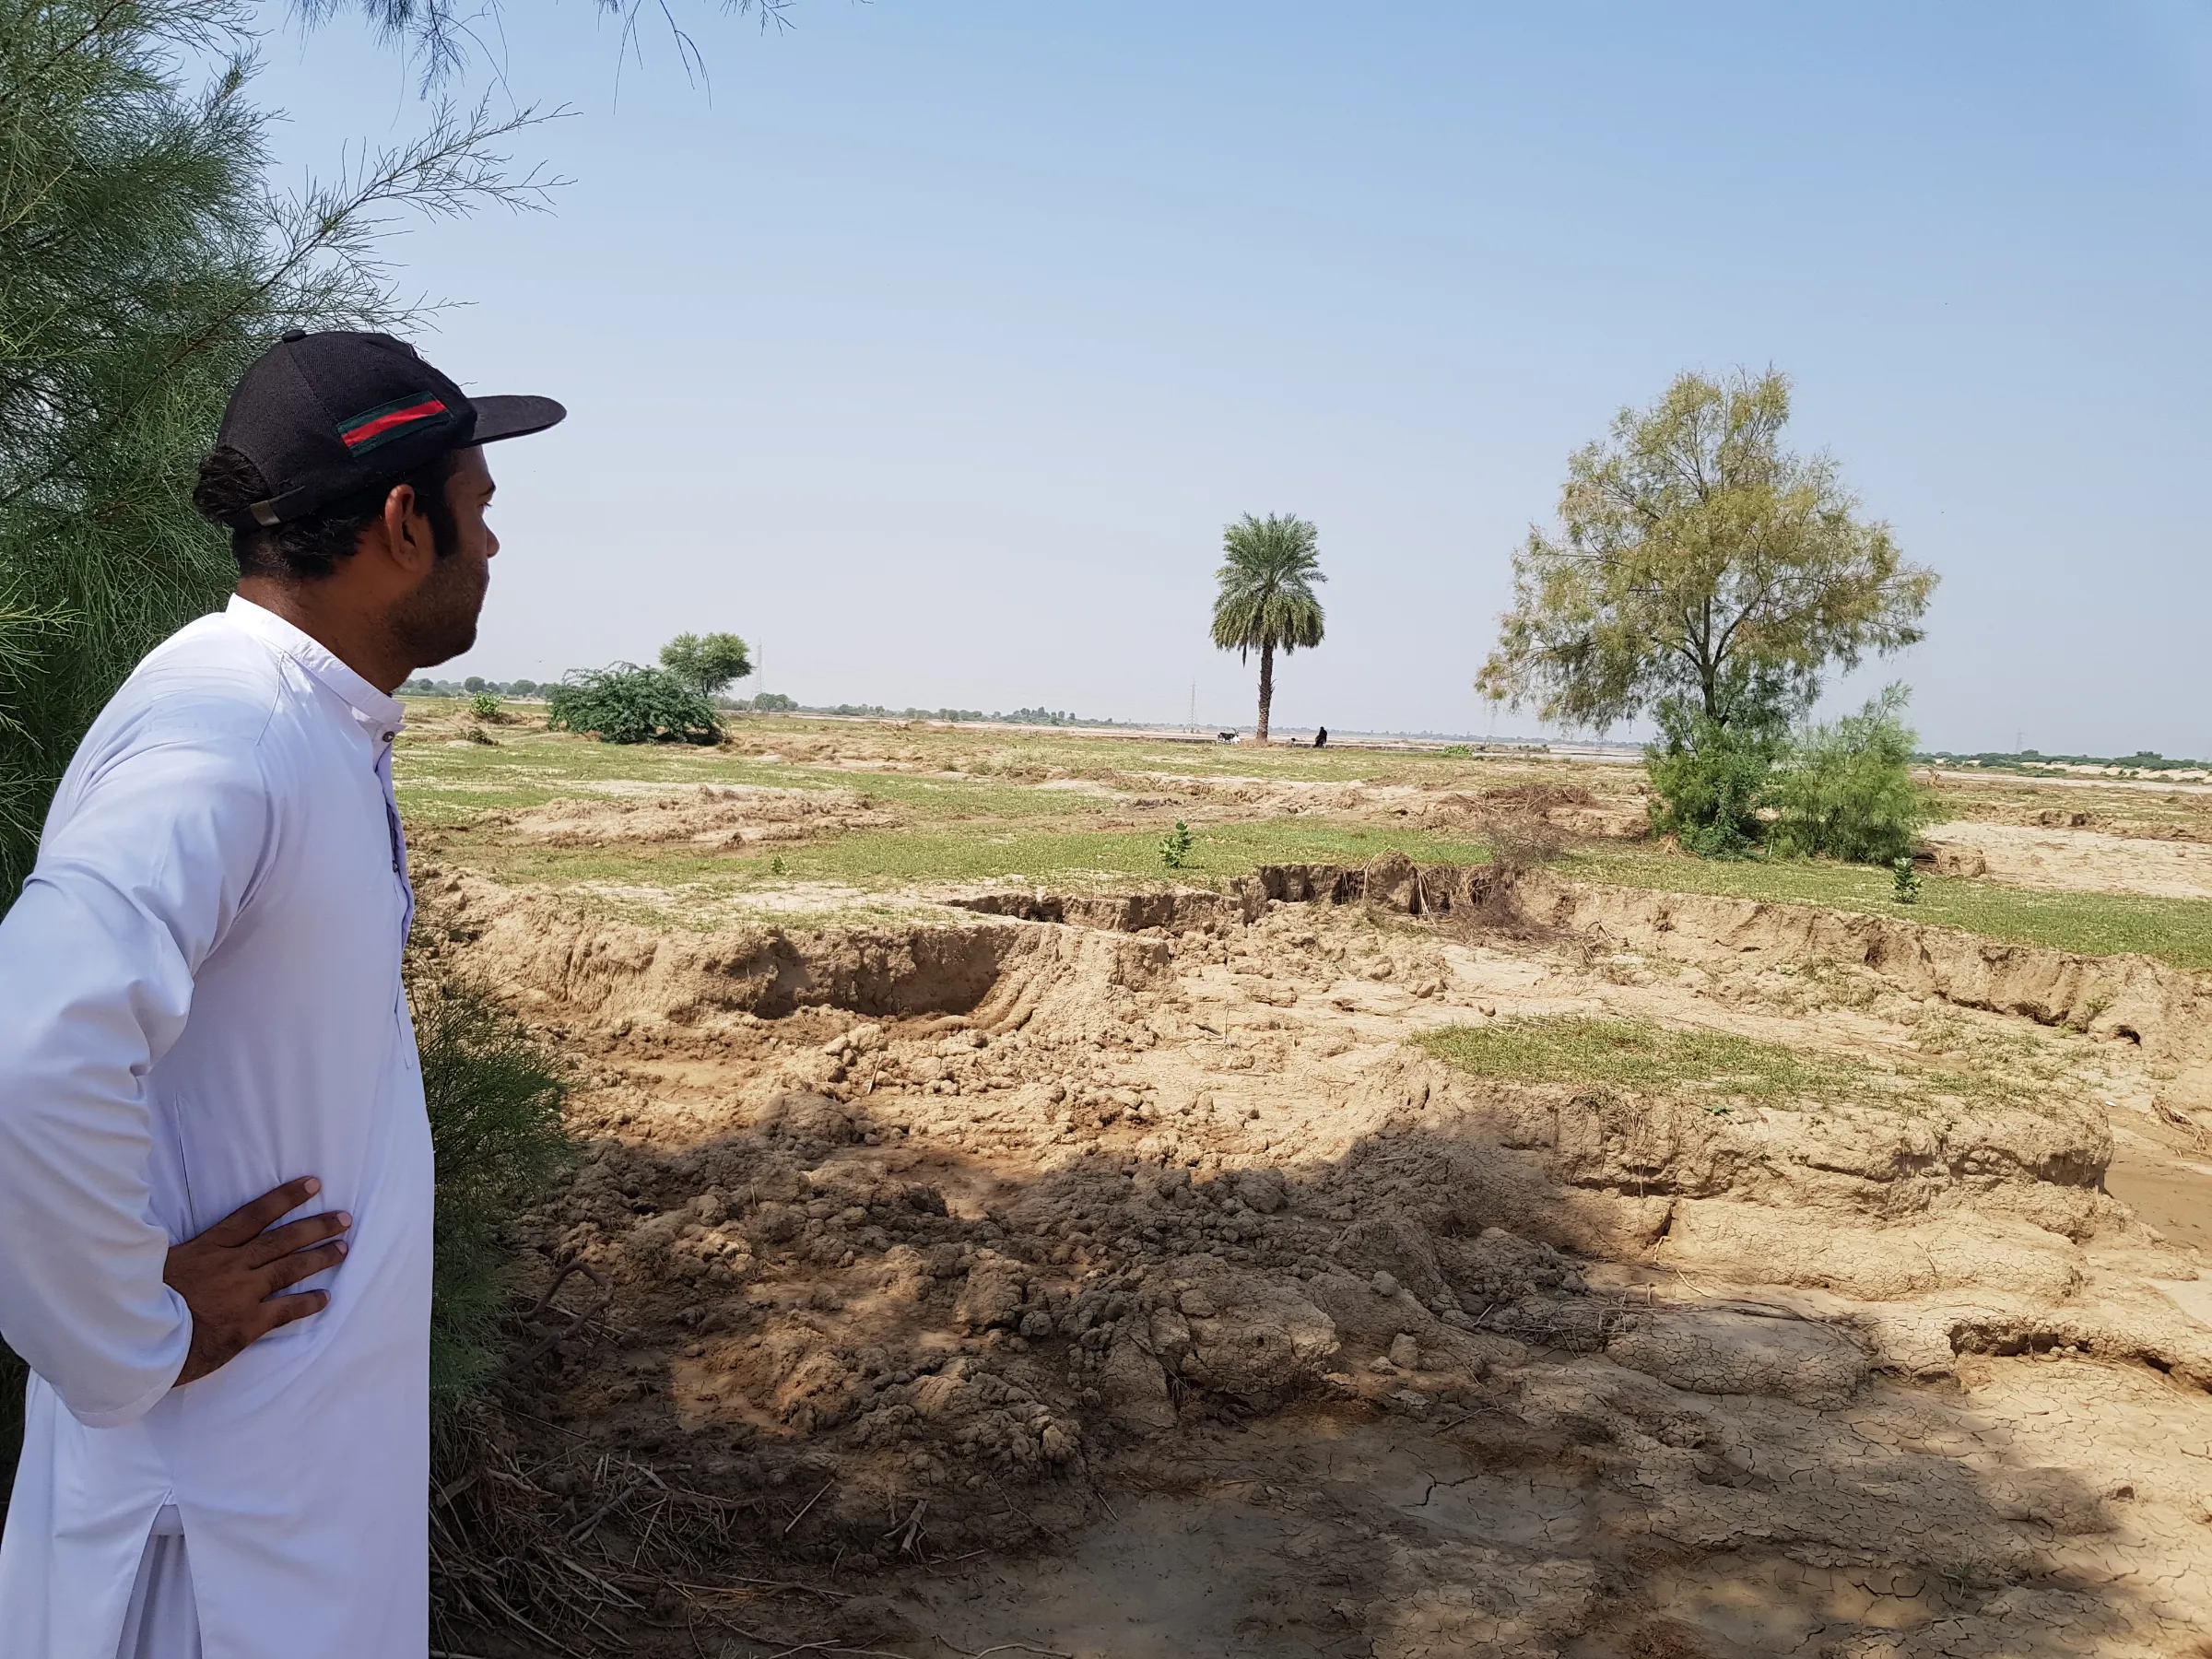 Muhammad Awais, a cotton grower, looks at the flood-damaged fields in Hasanabad, Pakistan, September 28, 2022. Thomson Reuters Foundation/Waqar Mustafa